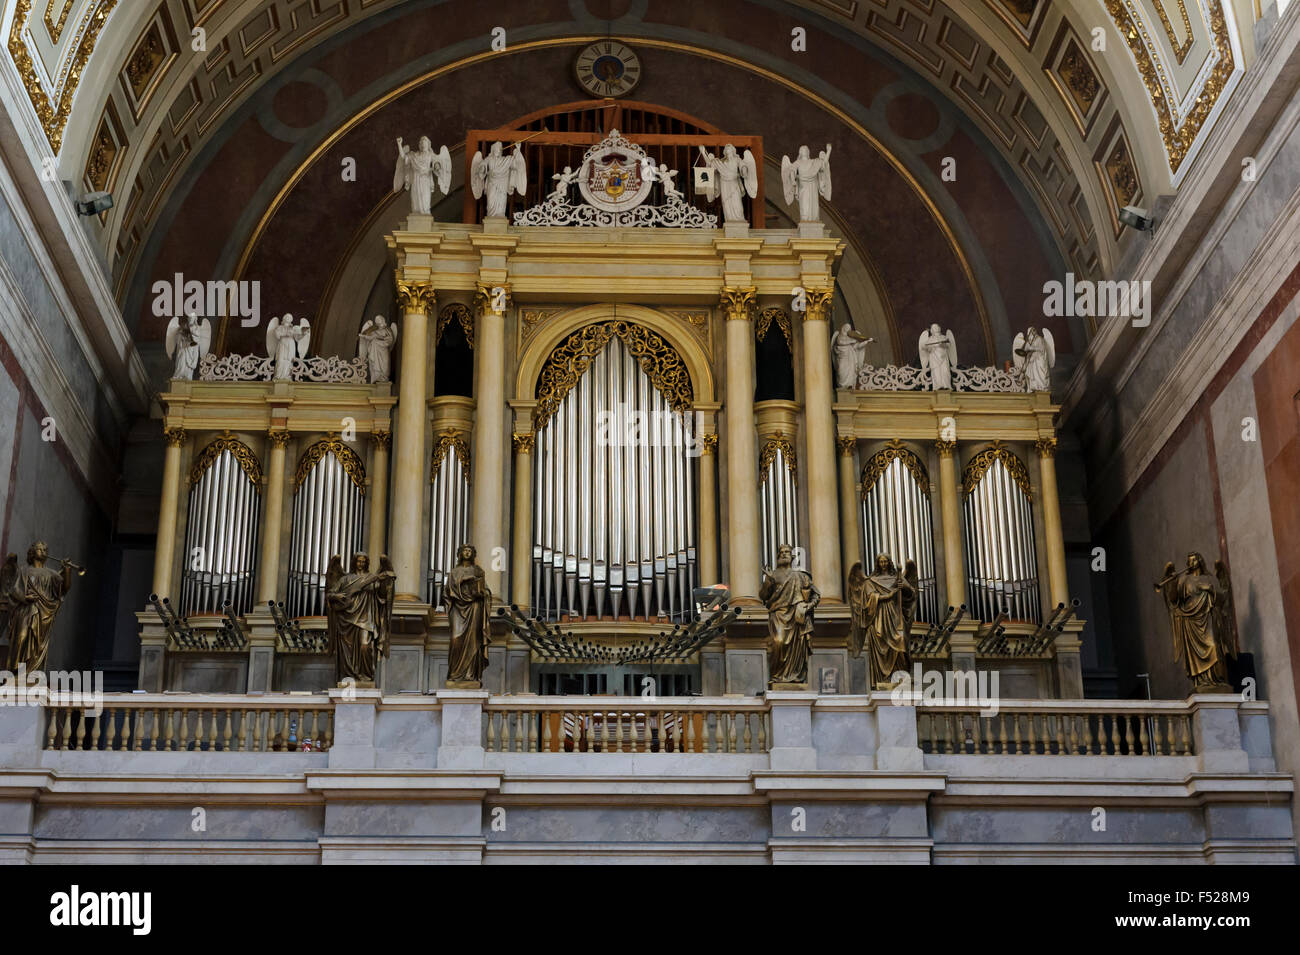 An organ in the Esztergom Basilica, Hungary Stock Photo - Alamy